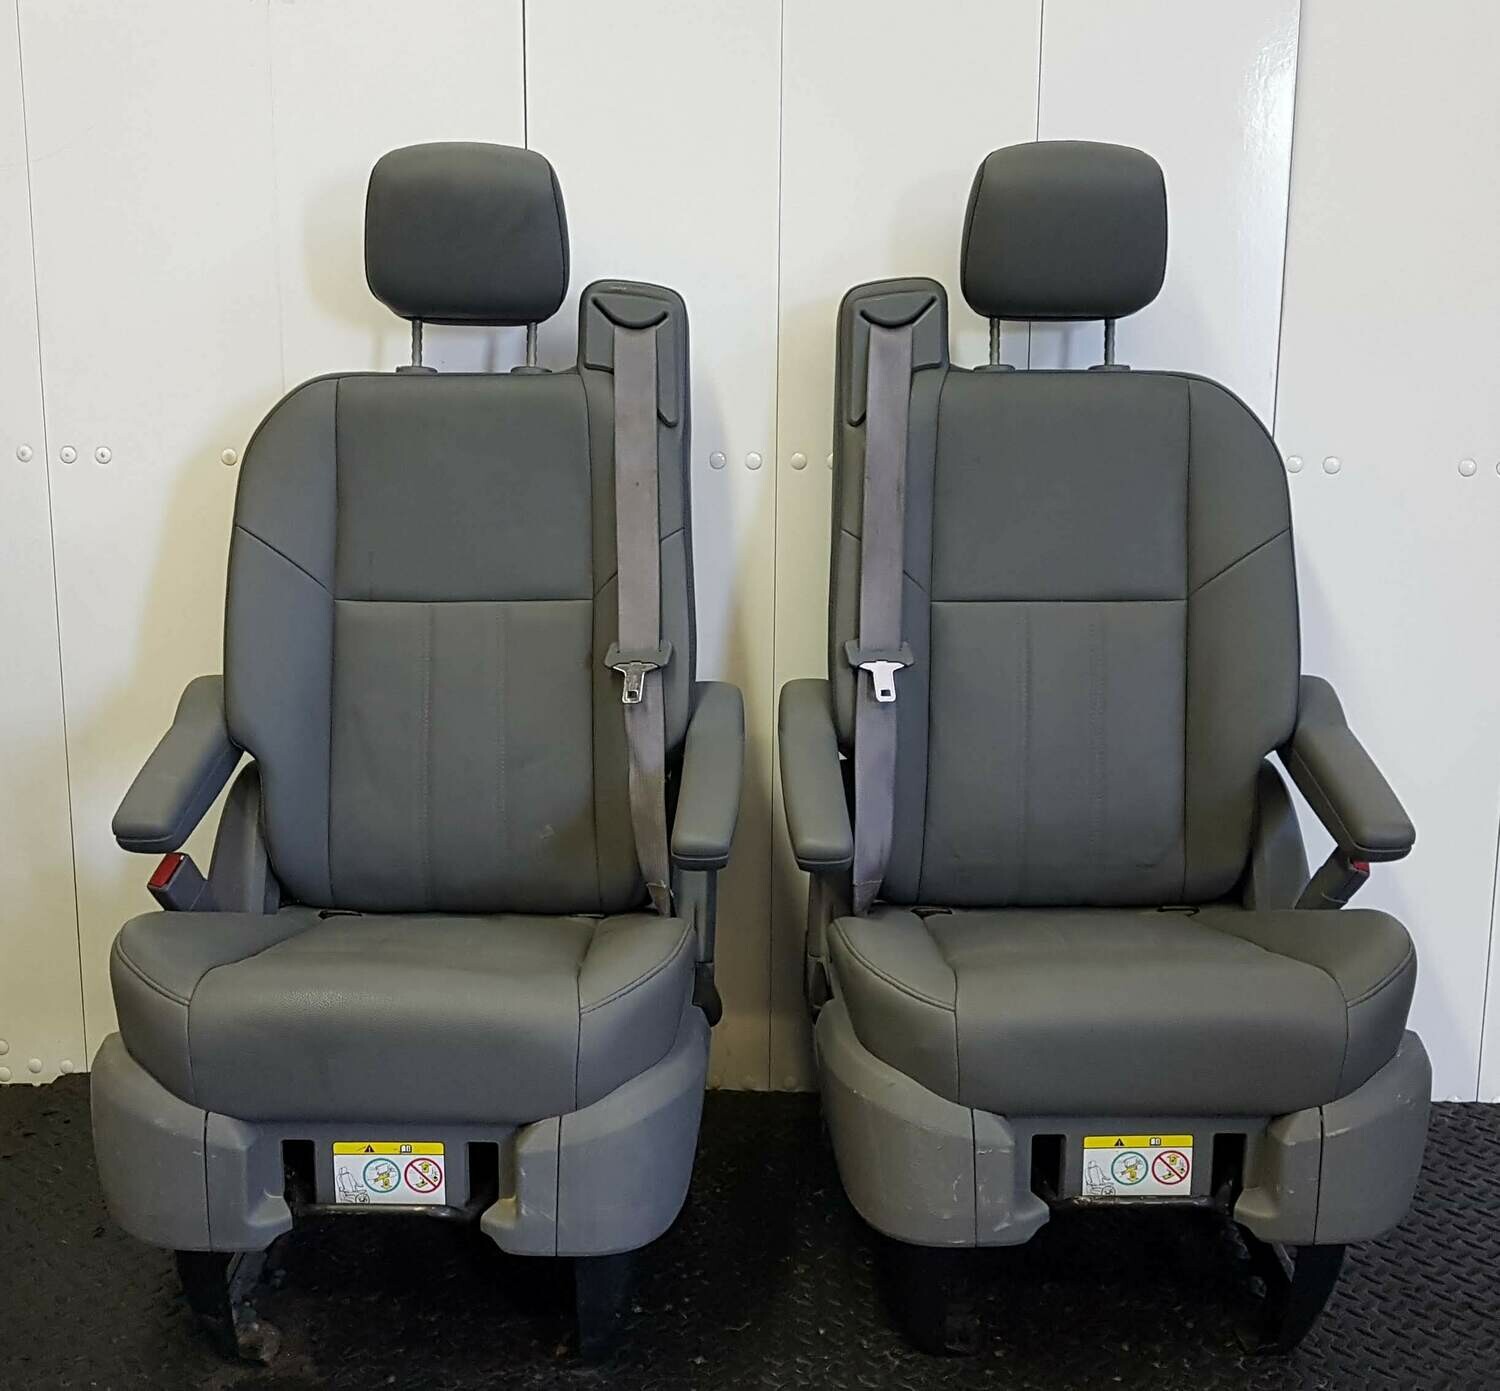 Pair of Leather Swivel Seats - Grey